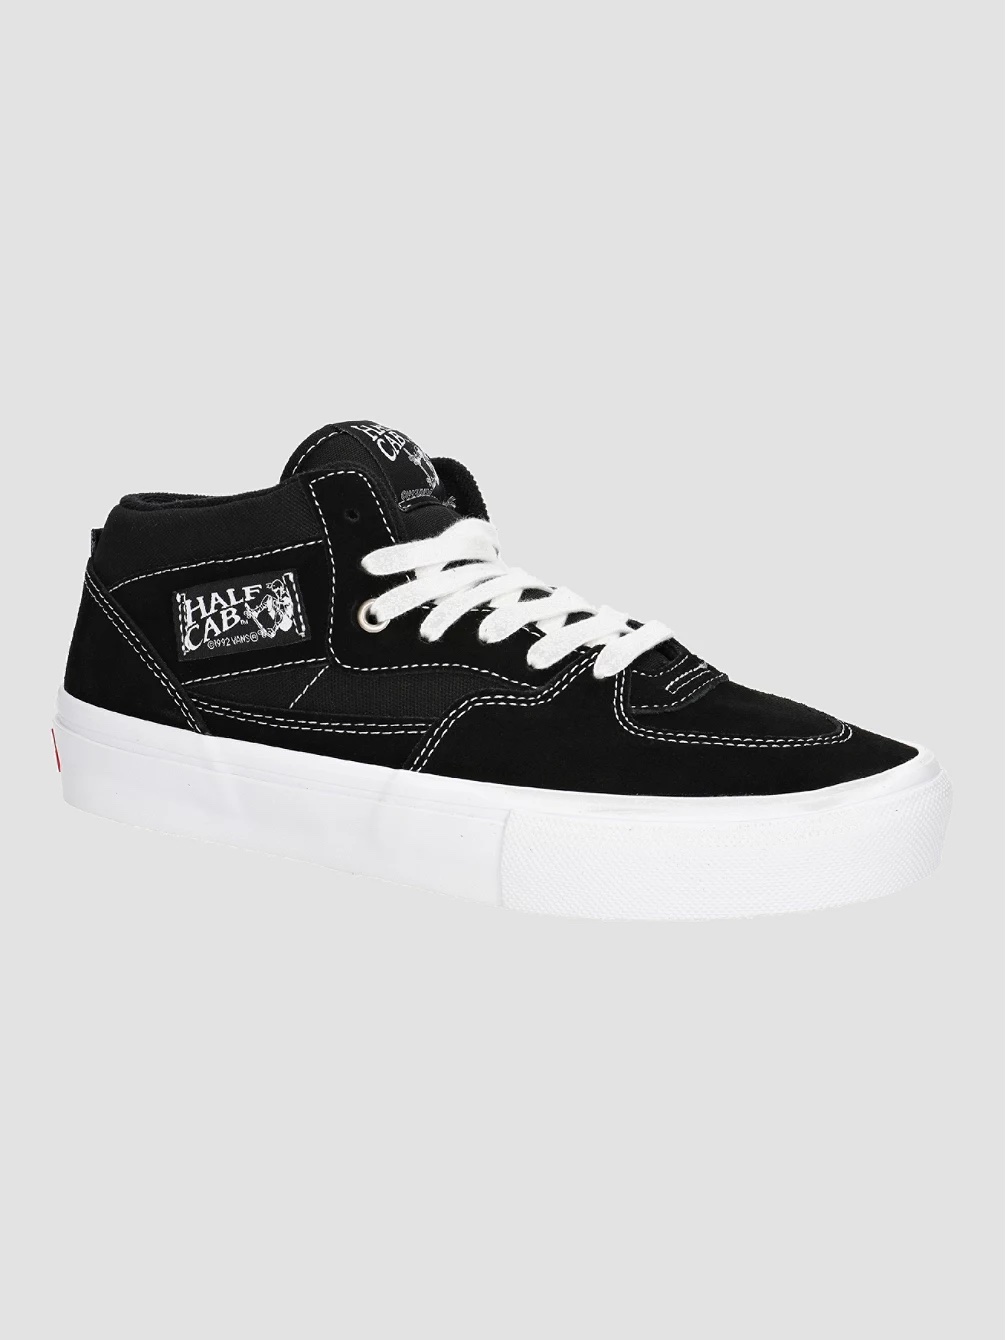 Shoes Vans Skate Half Cab Skate Black White 46